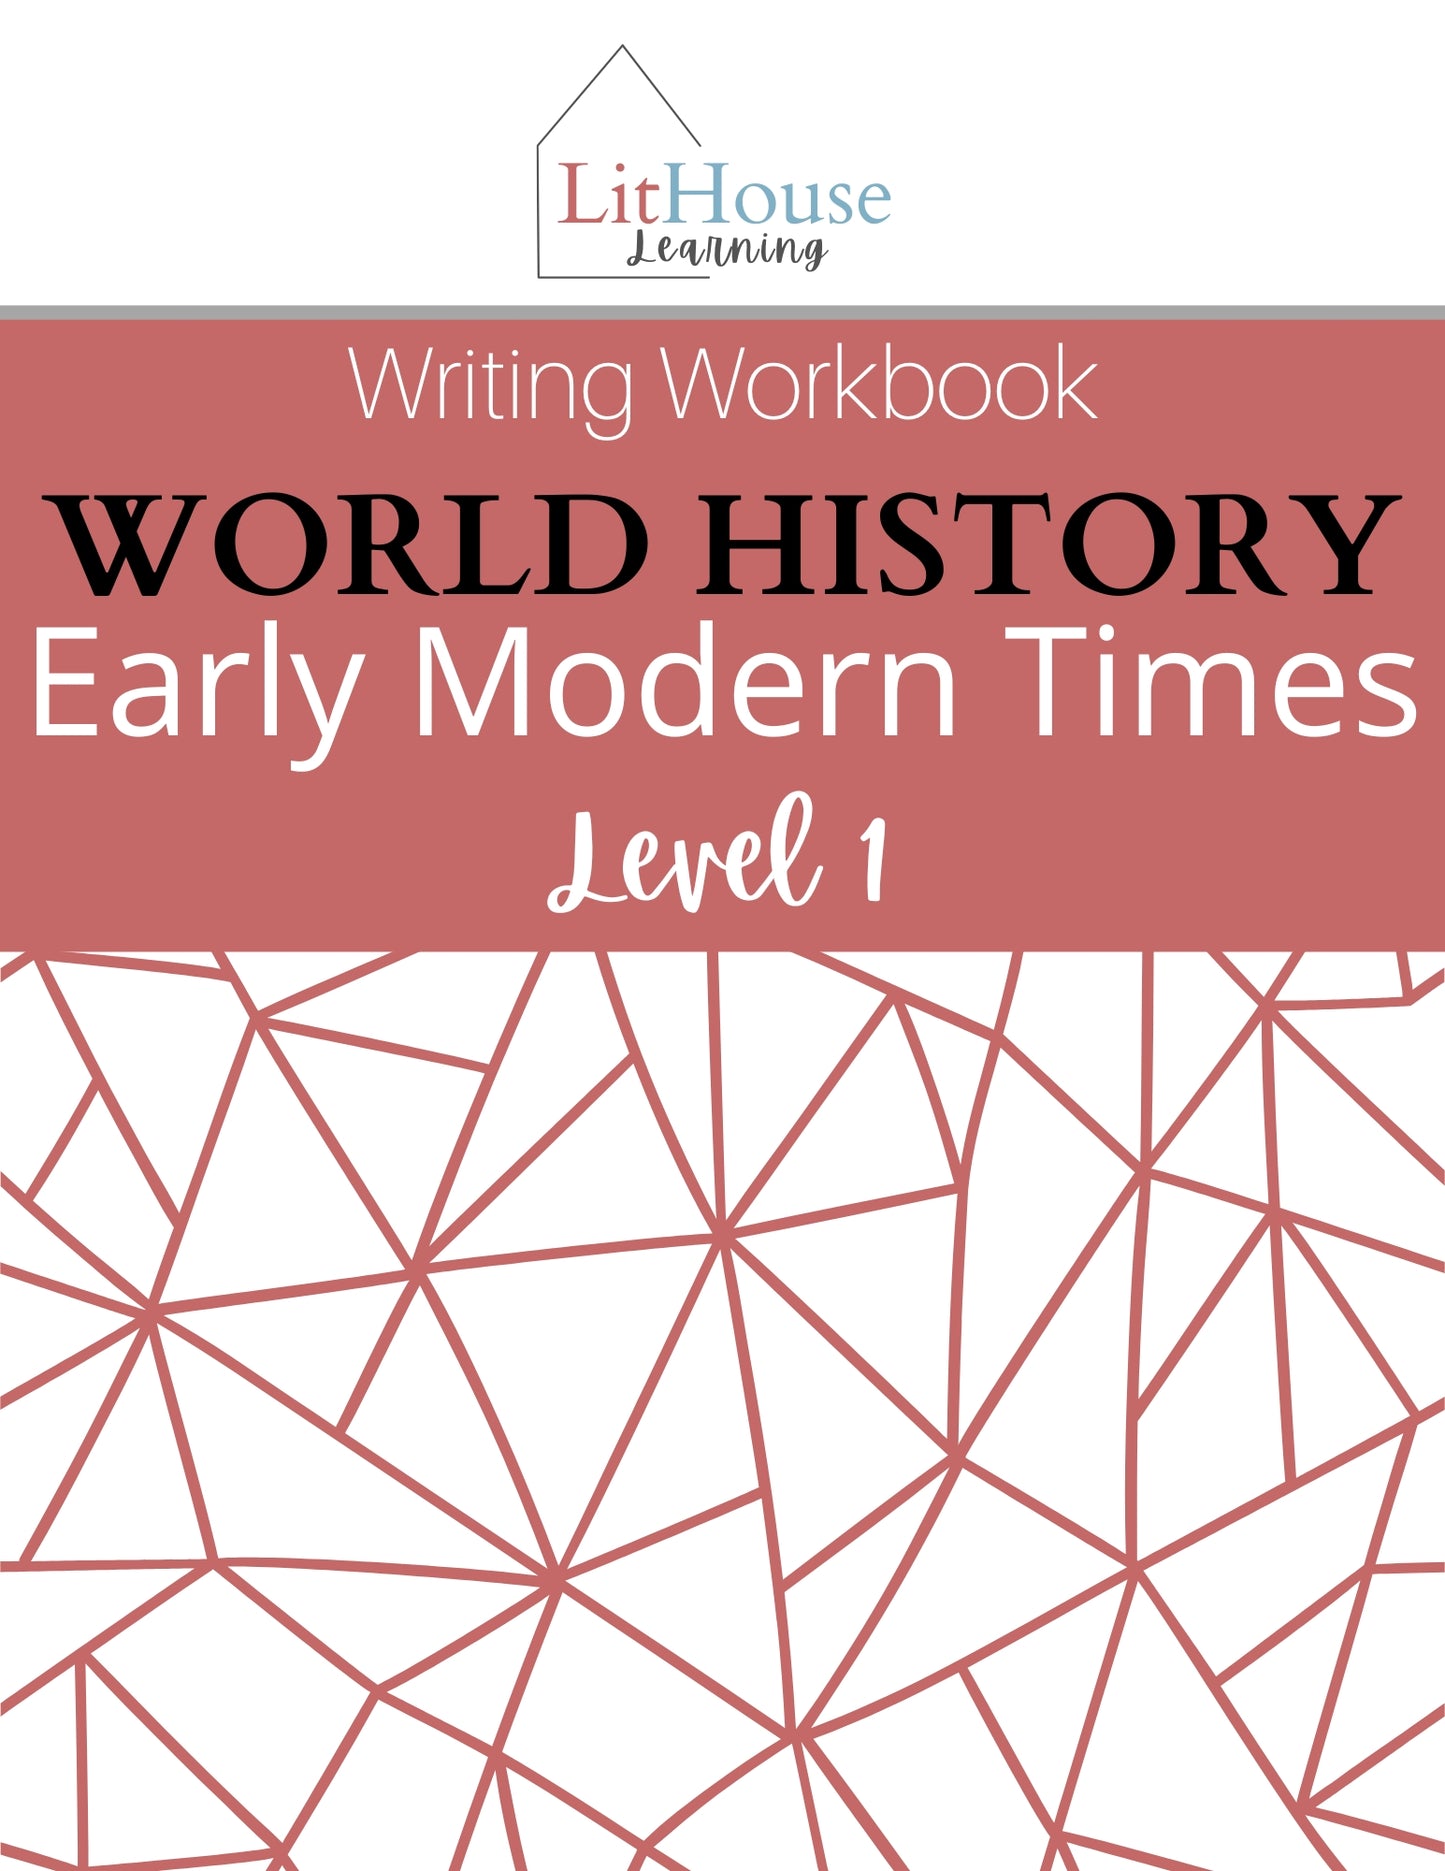 World History: Early Modern Times Writing Workbook